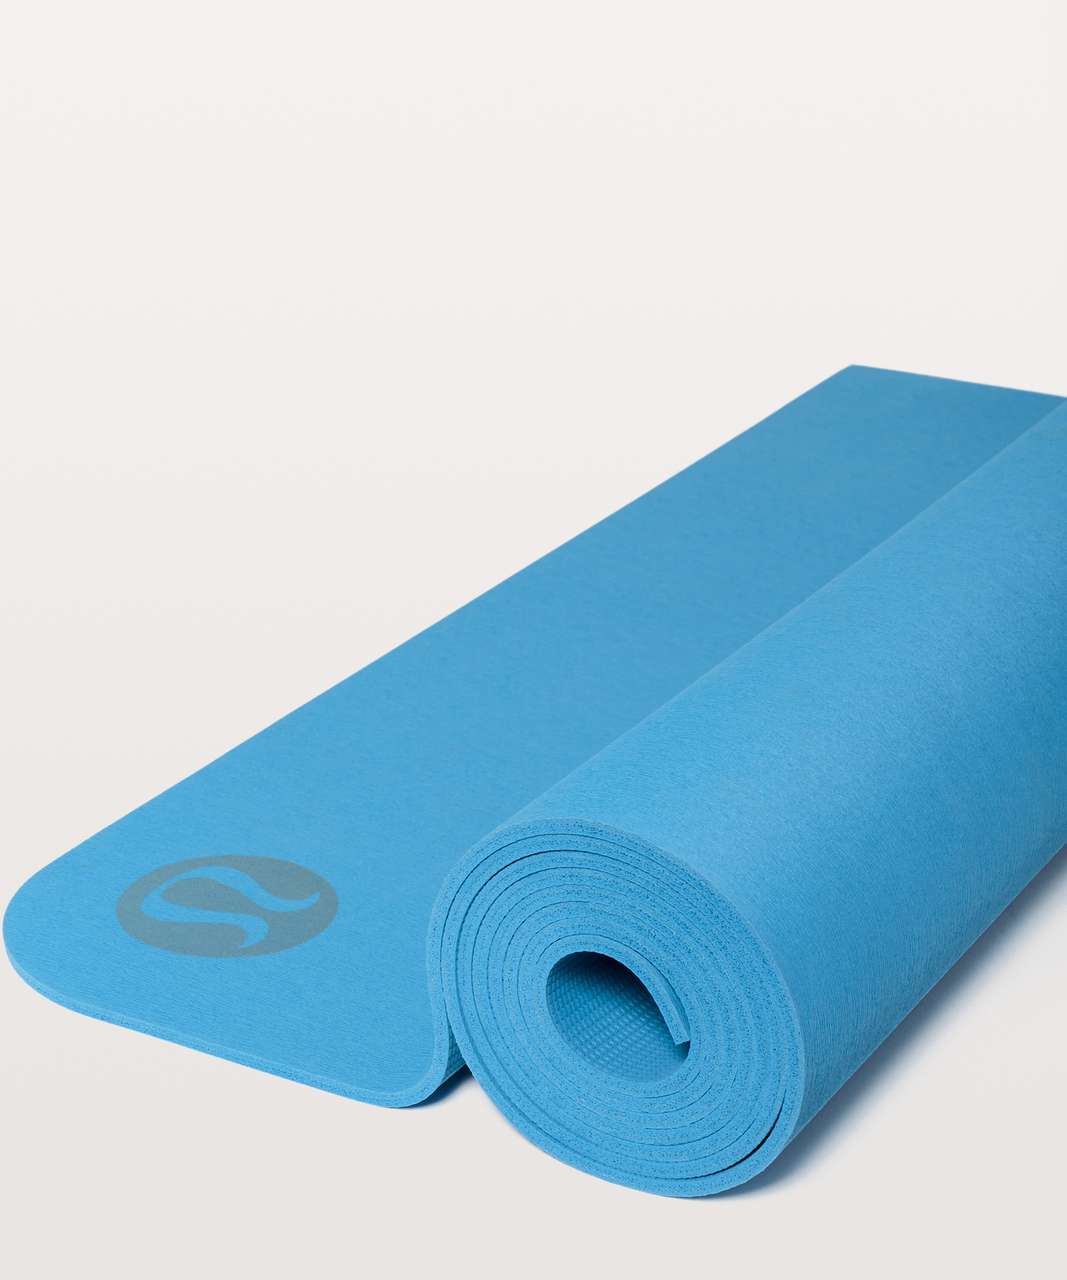 Lululemon Arise Yoga Mat 5mm FSC-certified Natural Rubber - Black unisex nwt